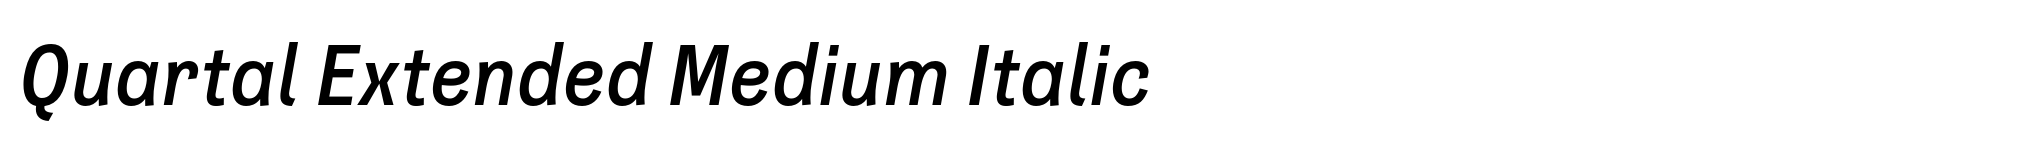 Quartal Extended Medium Italic image